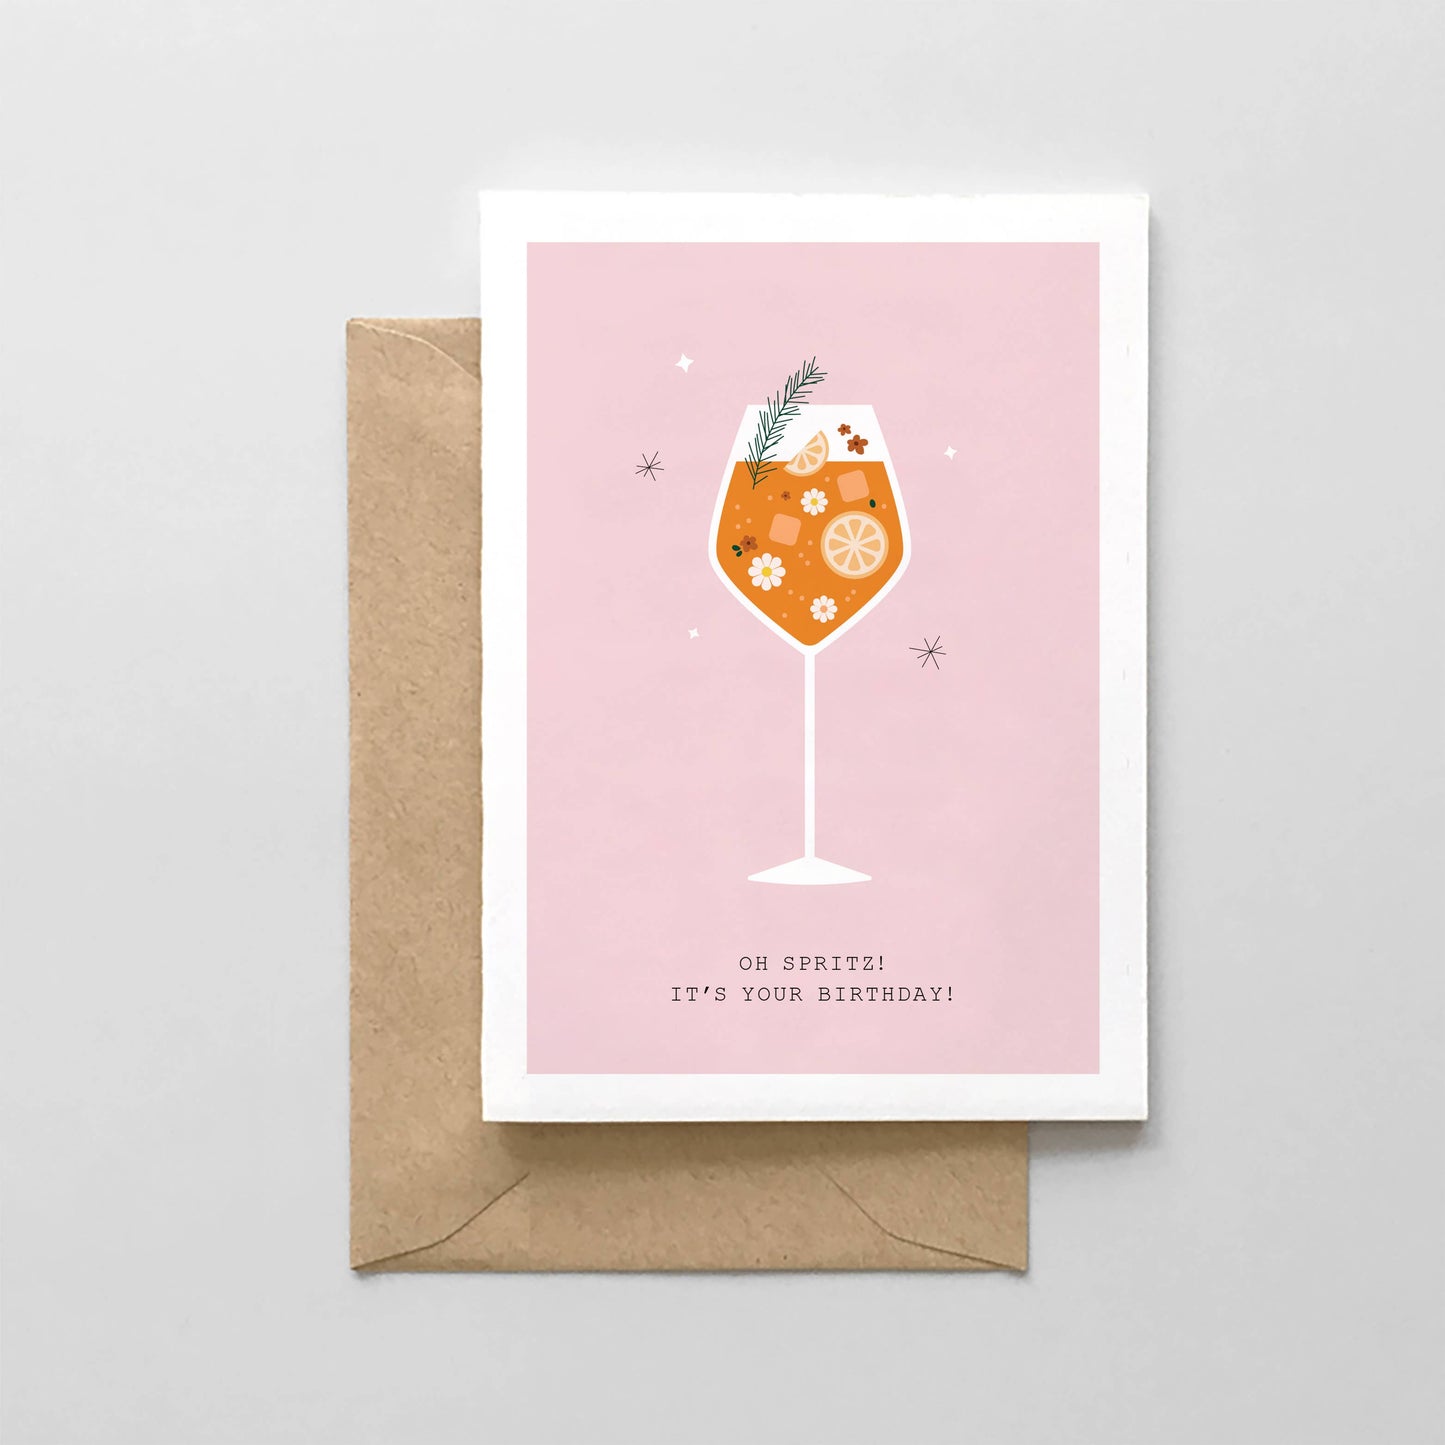 Oh Spritz! It's Your Birthday! Aperol Spritz Design Card - Spaghetti & Meatballs